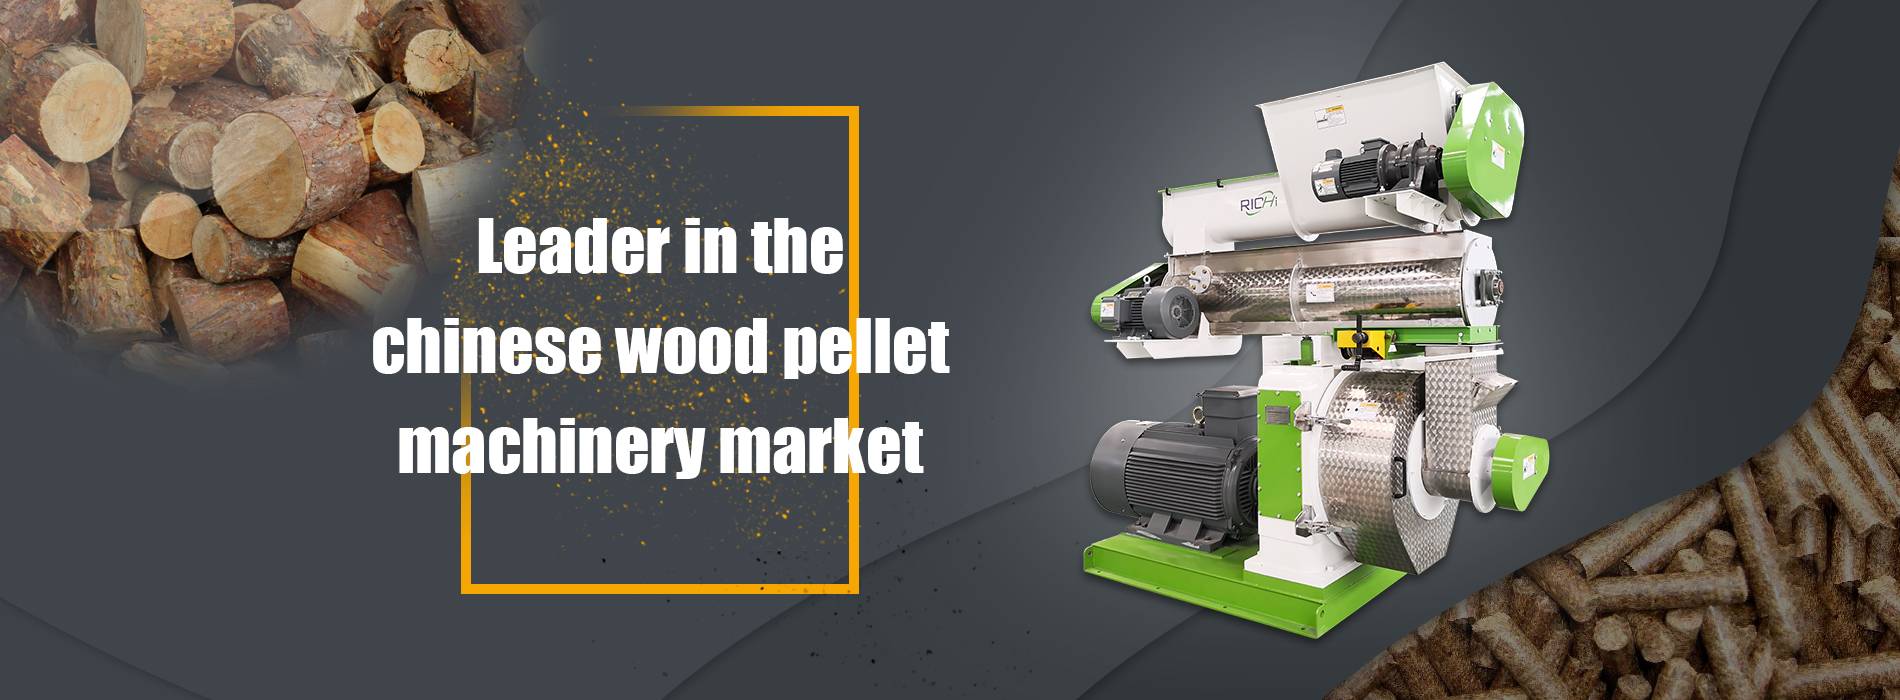 leader in chinese wood pellet machine market